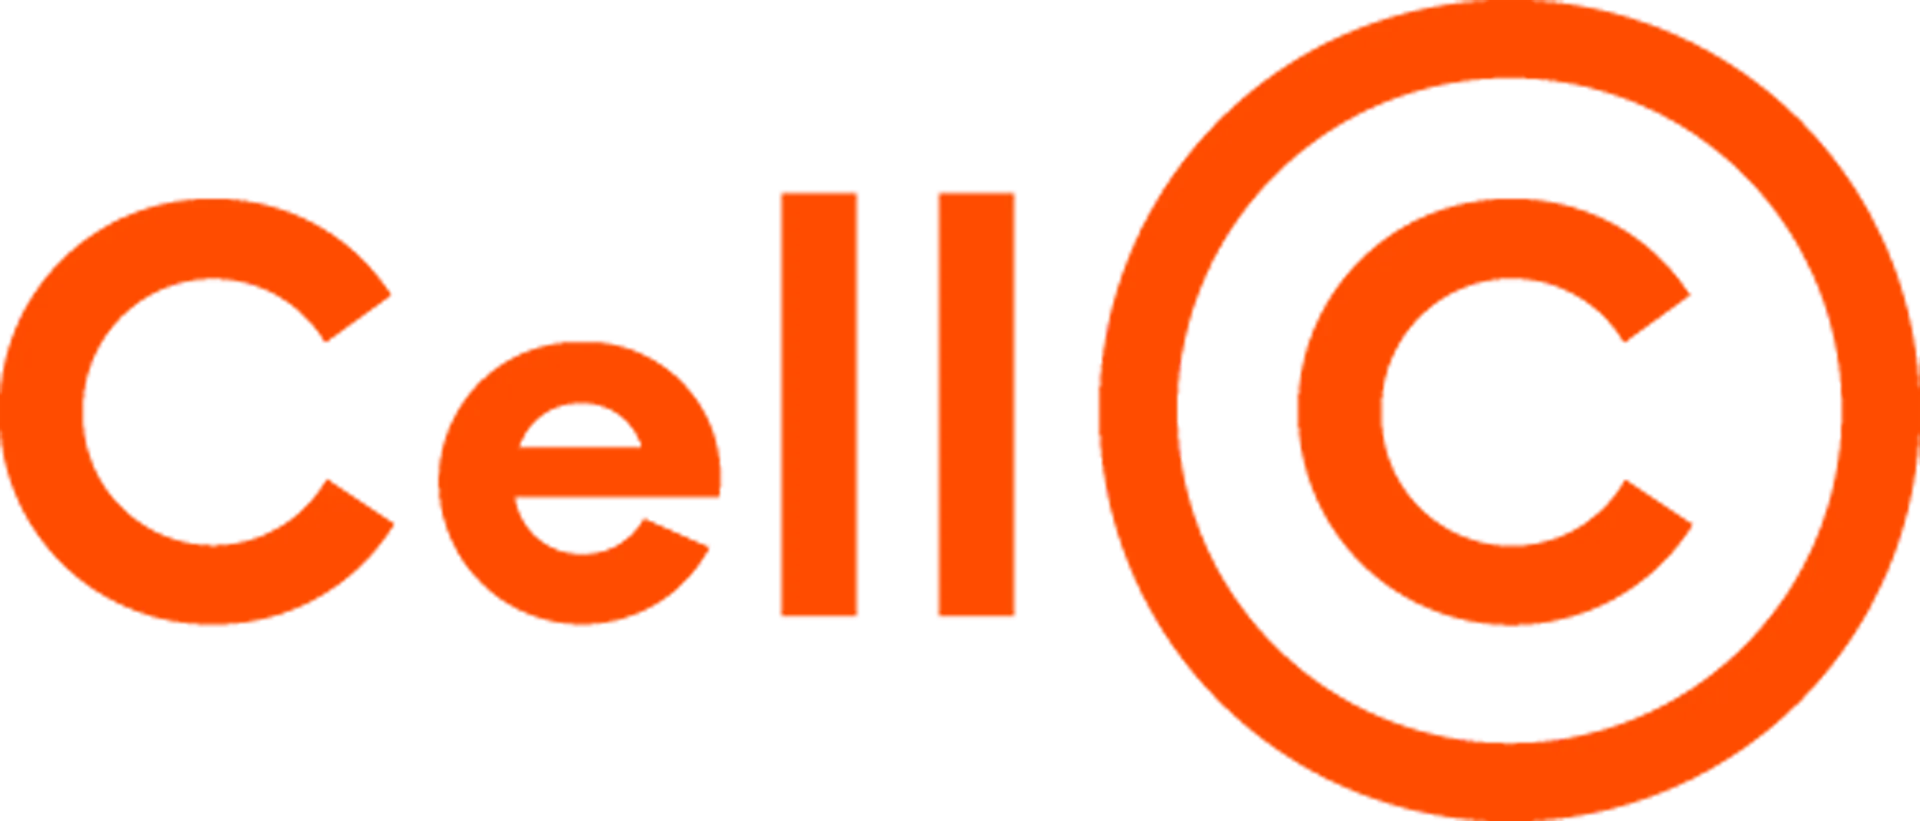 CELL C logo